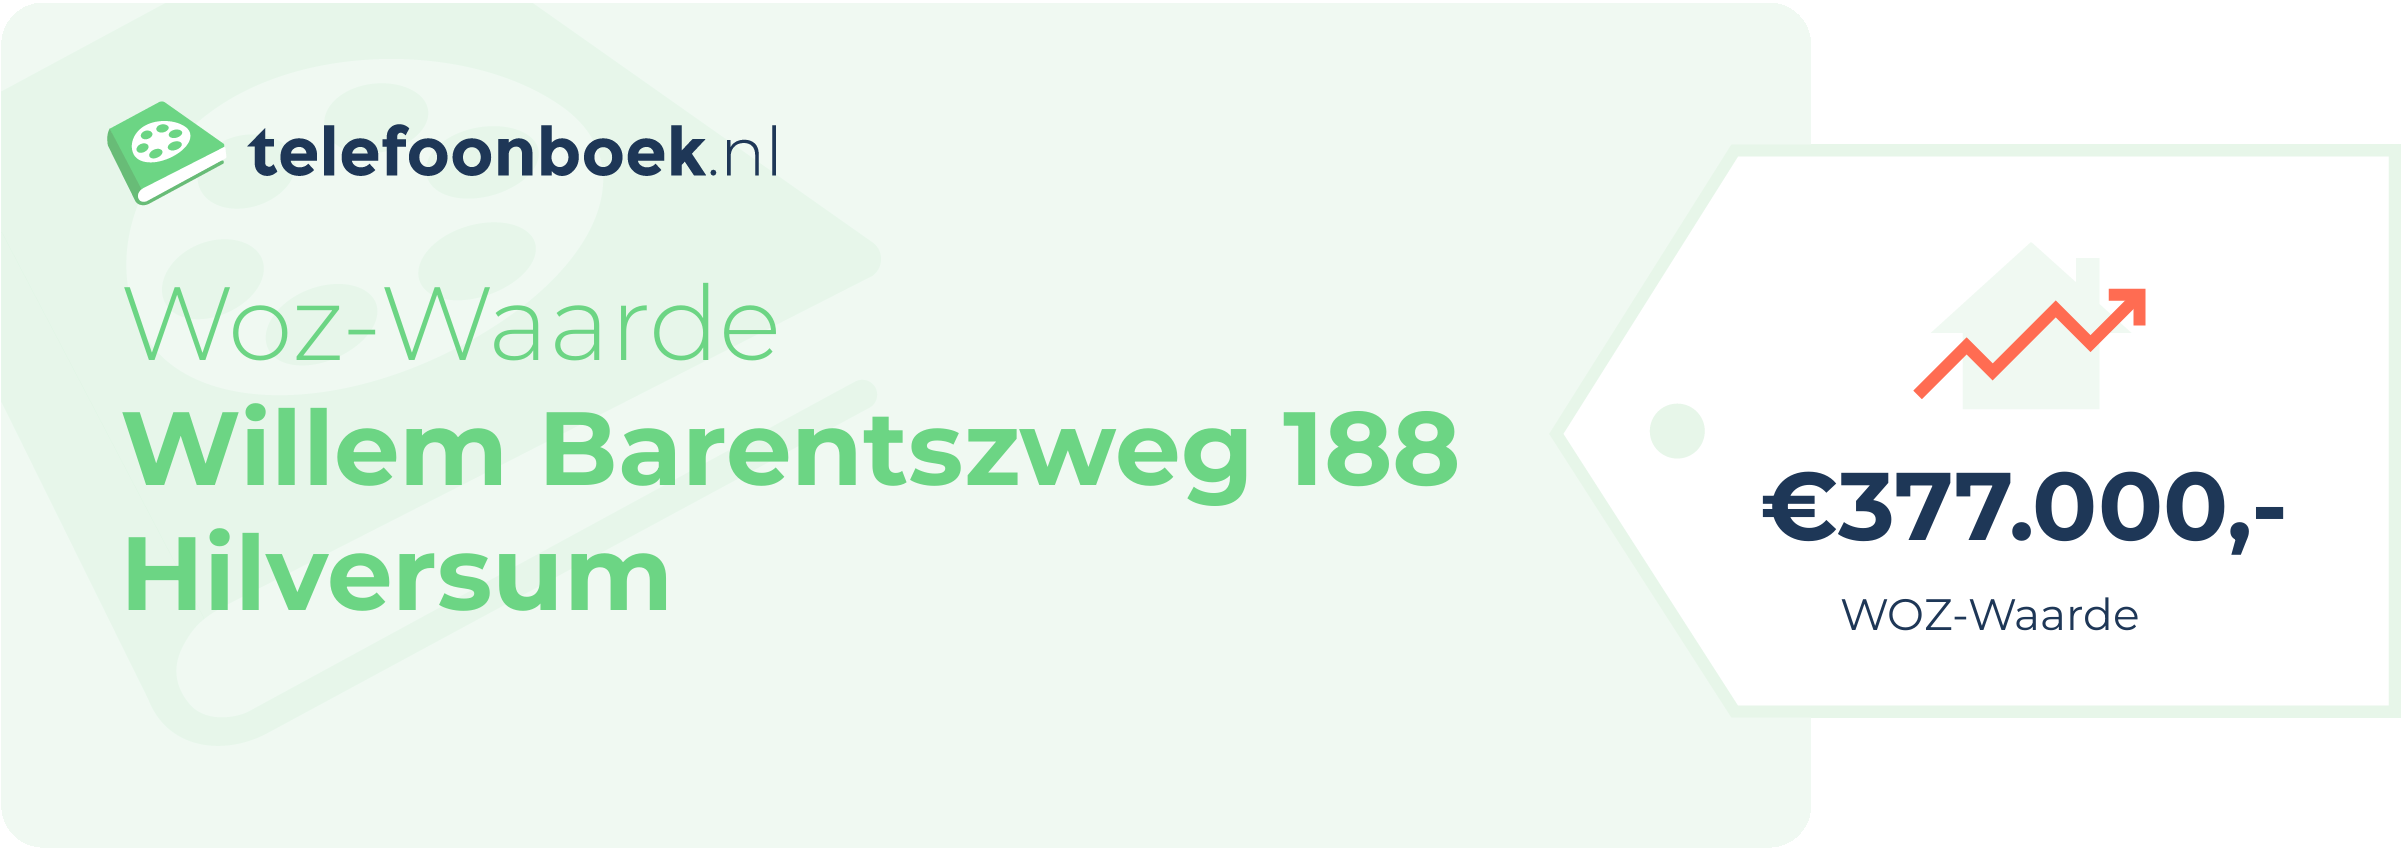 WOZ-waarde Willem Barentszweg 188 Hilversum